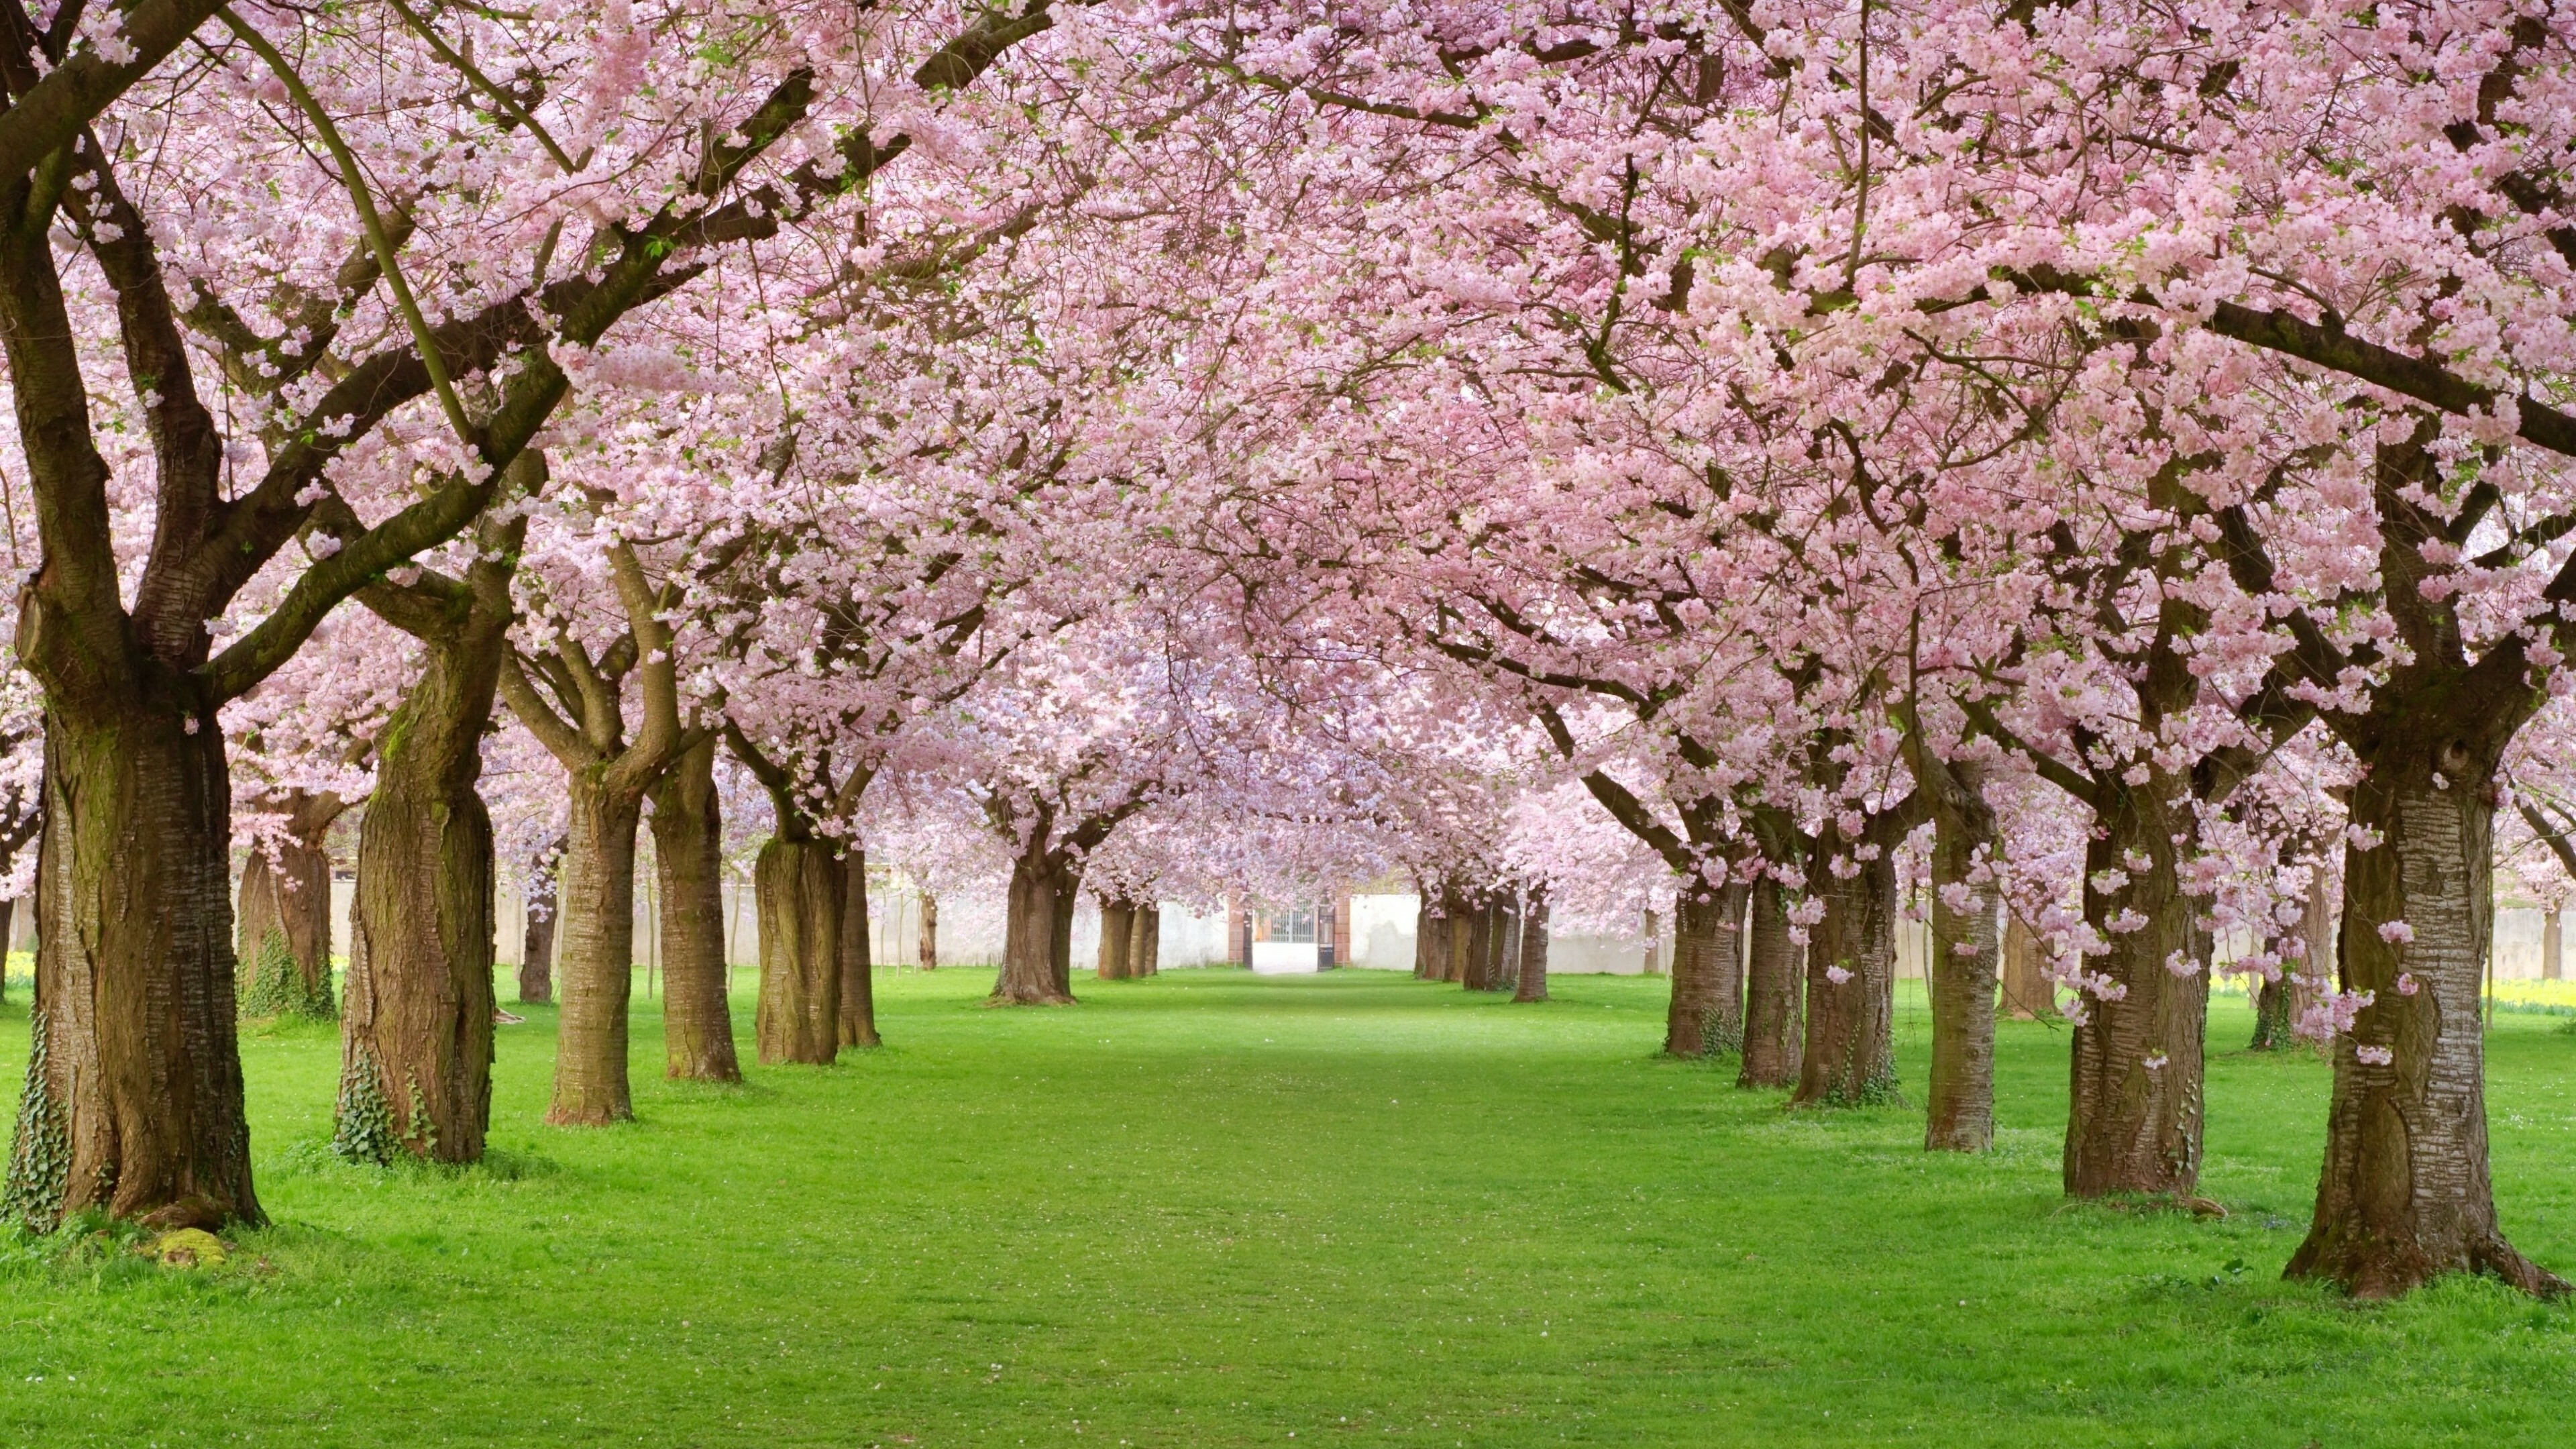 Blossoming park wallpaper, Pink nature's beauty, Vibrant floral display, Seasonal charm, 3840x2160 4K Desktop